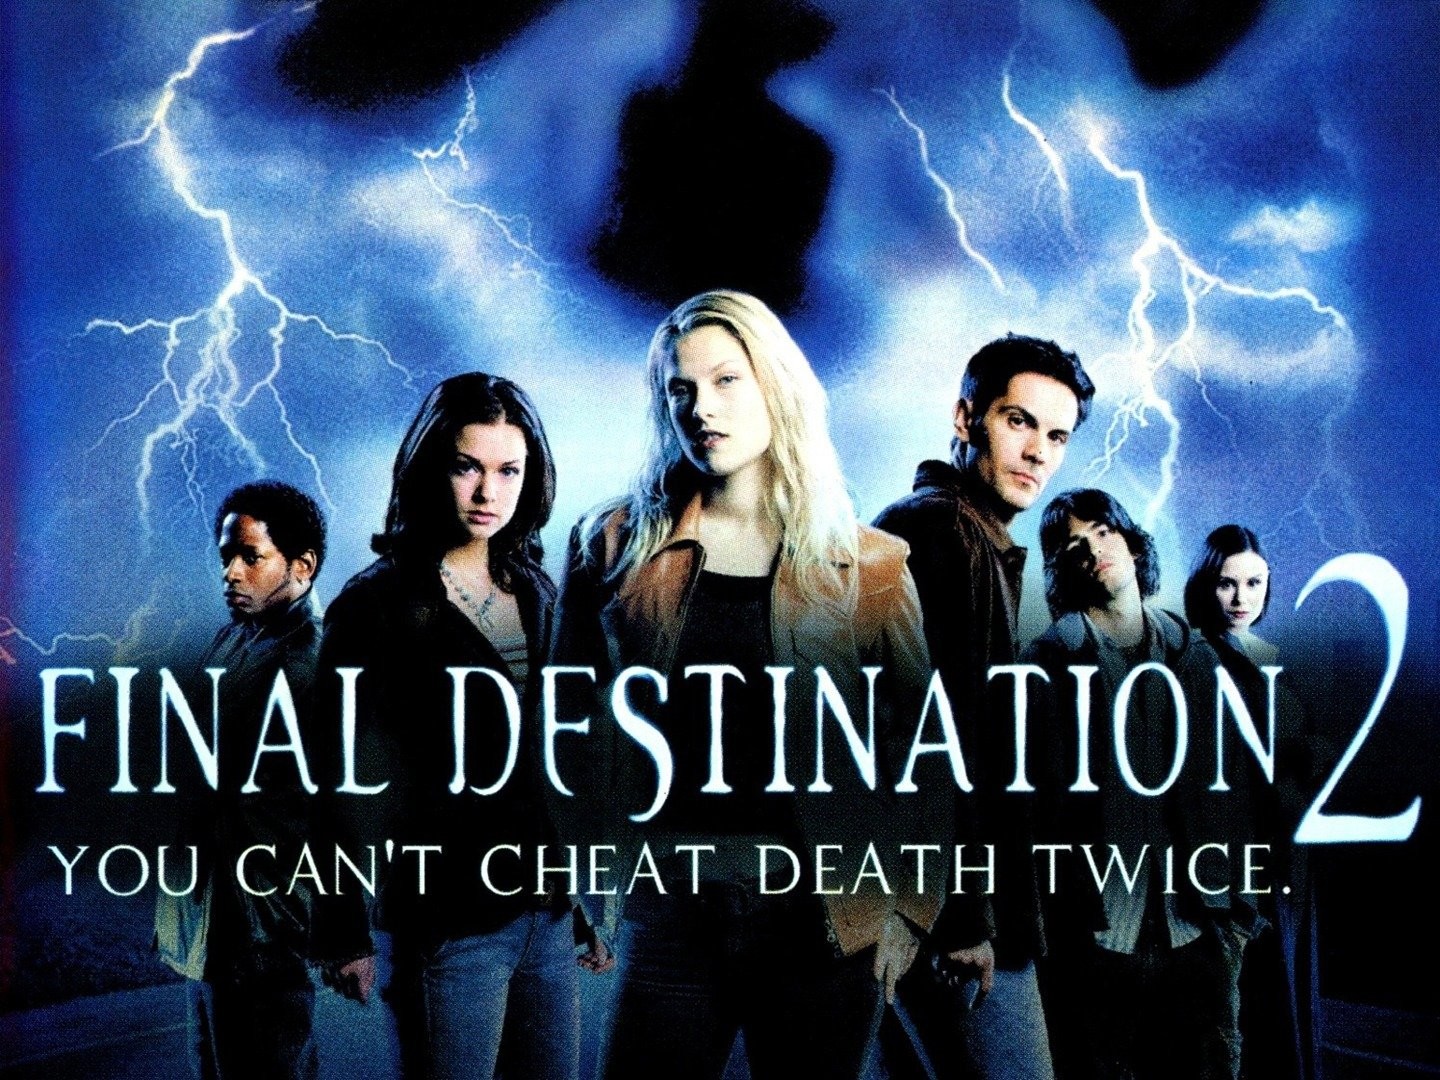 Final destination 1 shooting script with original ending